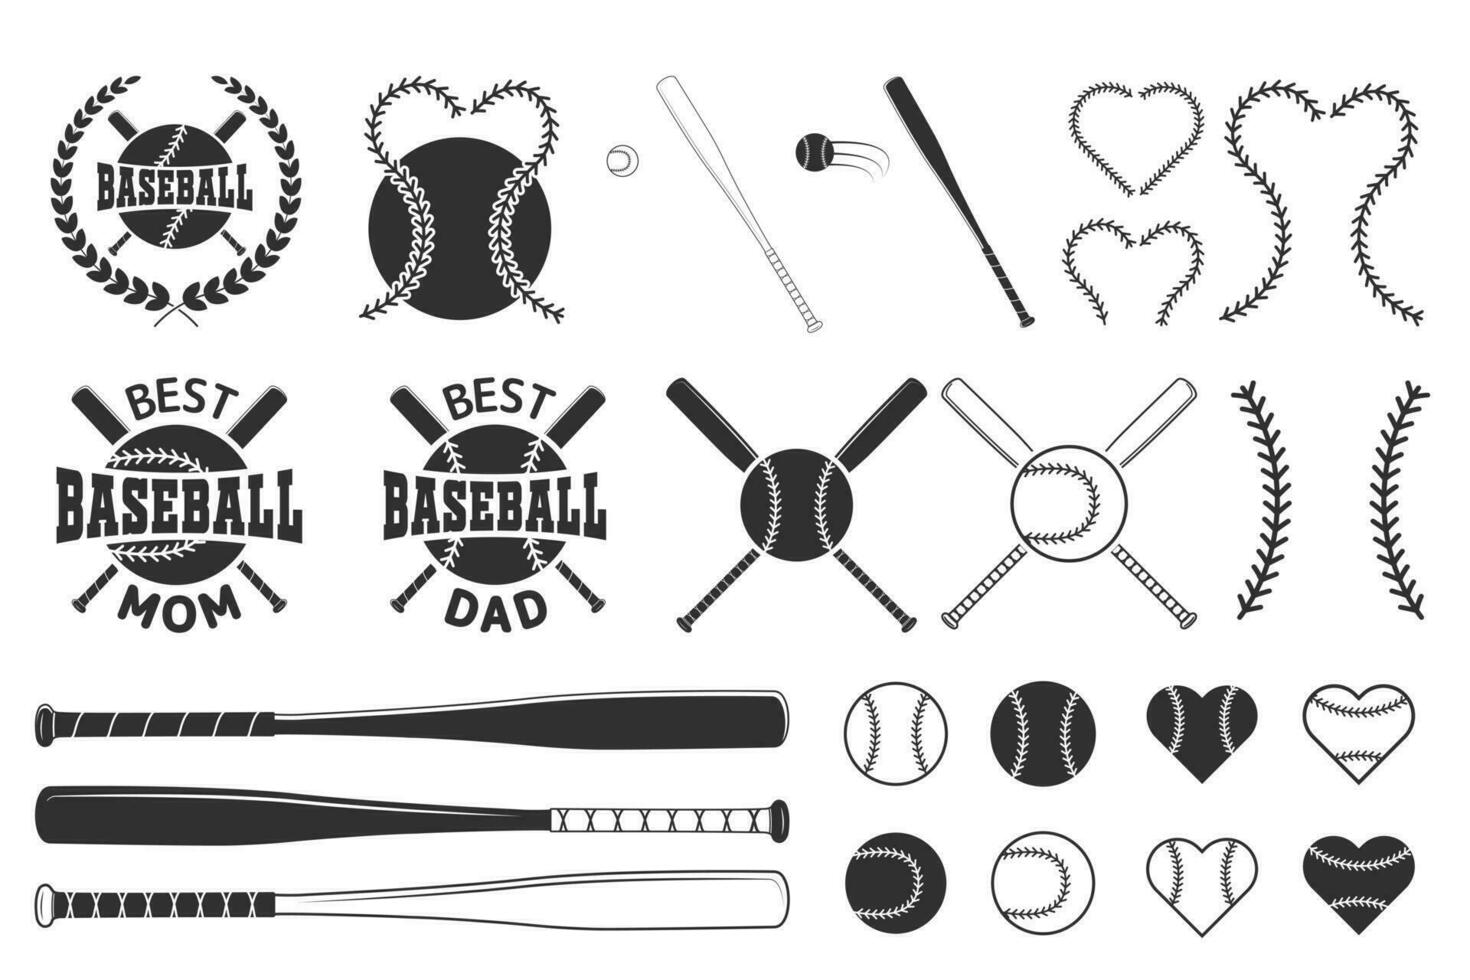 baseball tipografia fascio, baseball vettore fascio, gli sport, baseball, vettore, silhouette, gli sport silhouette, baseball logo fascio, gioco vettore, gioco torneo, baseball torneo, campioni lega